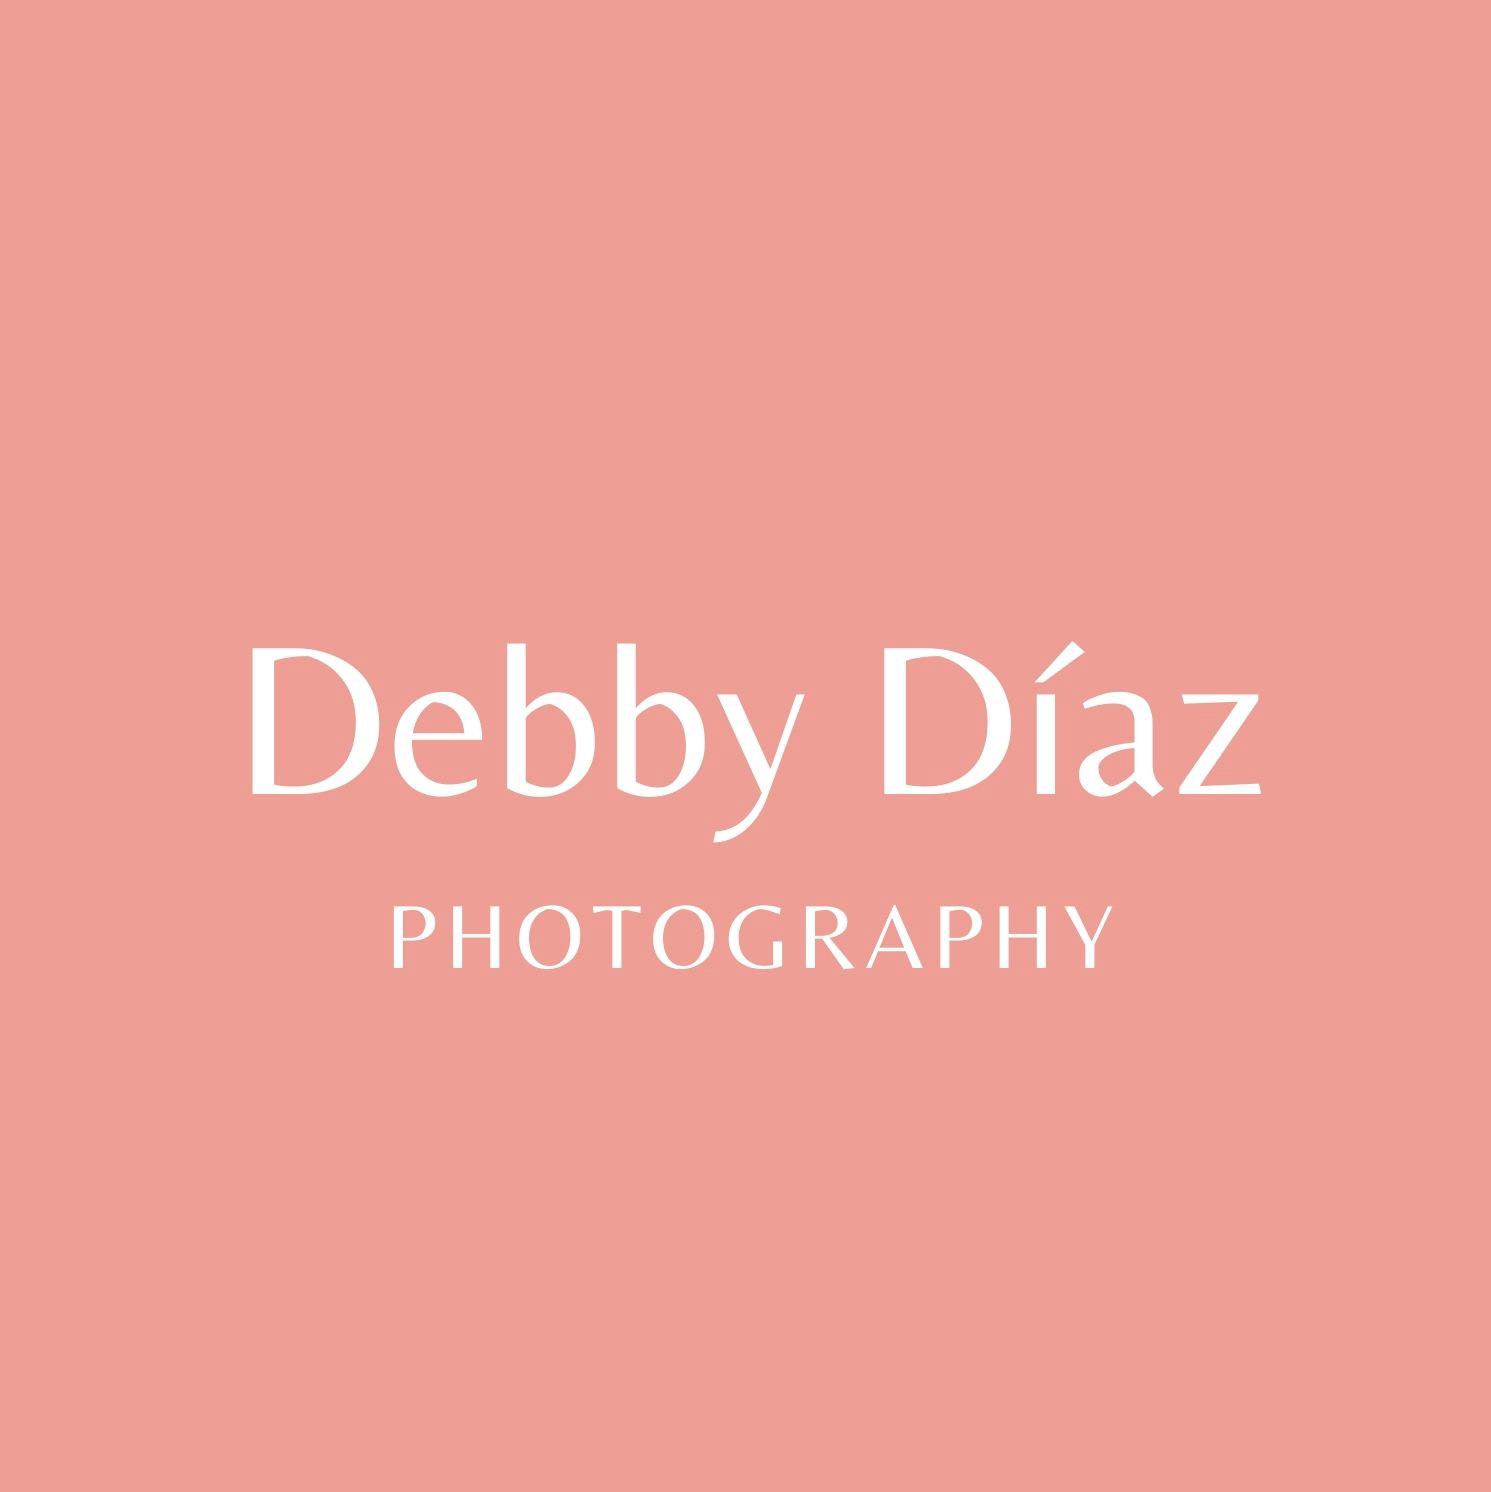 Debby Diaz